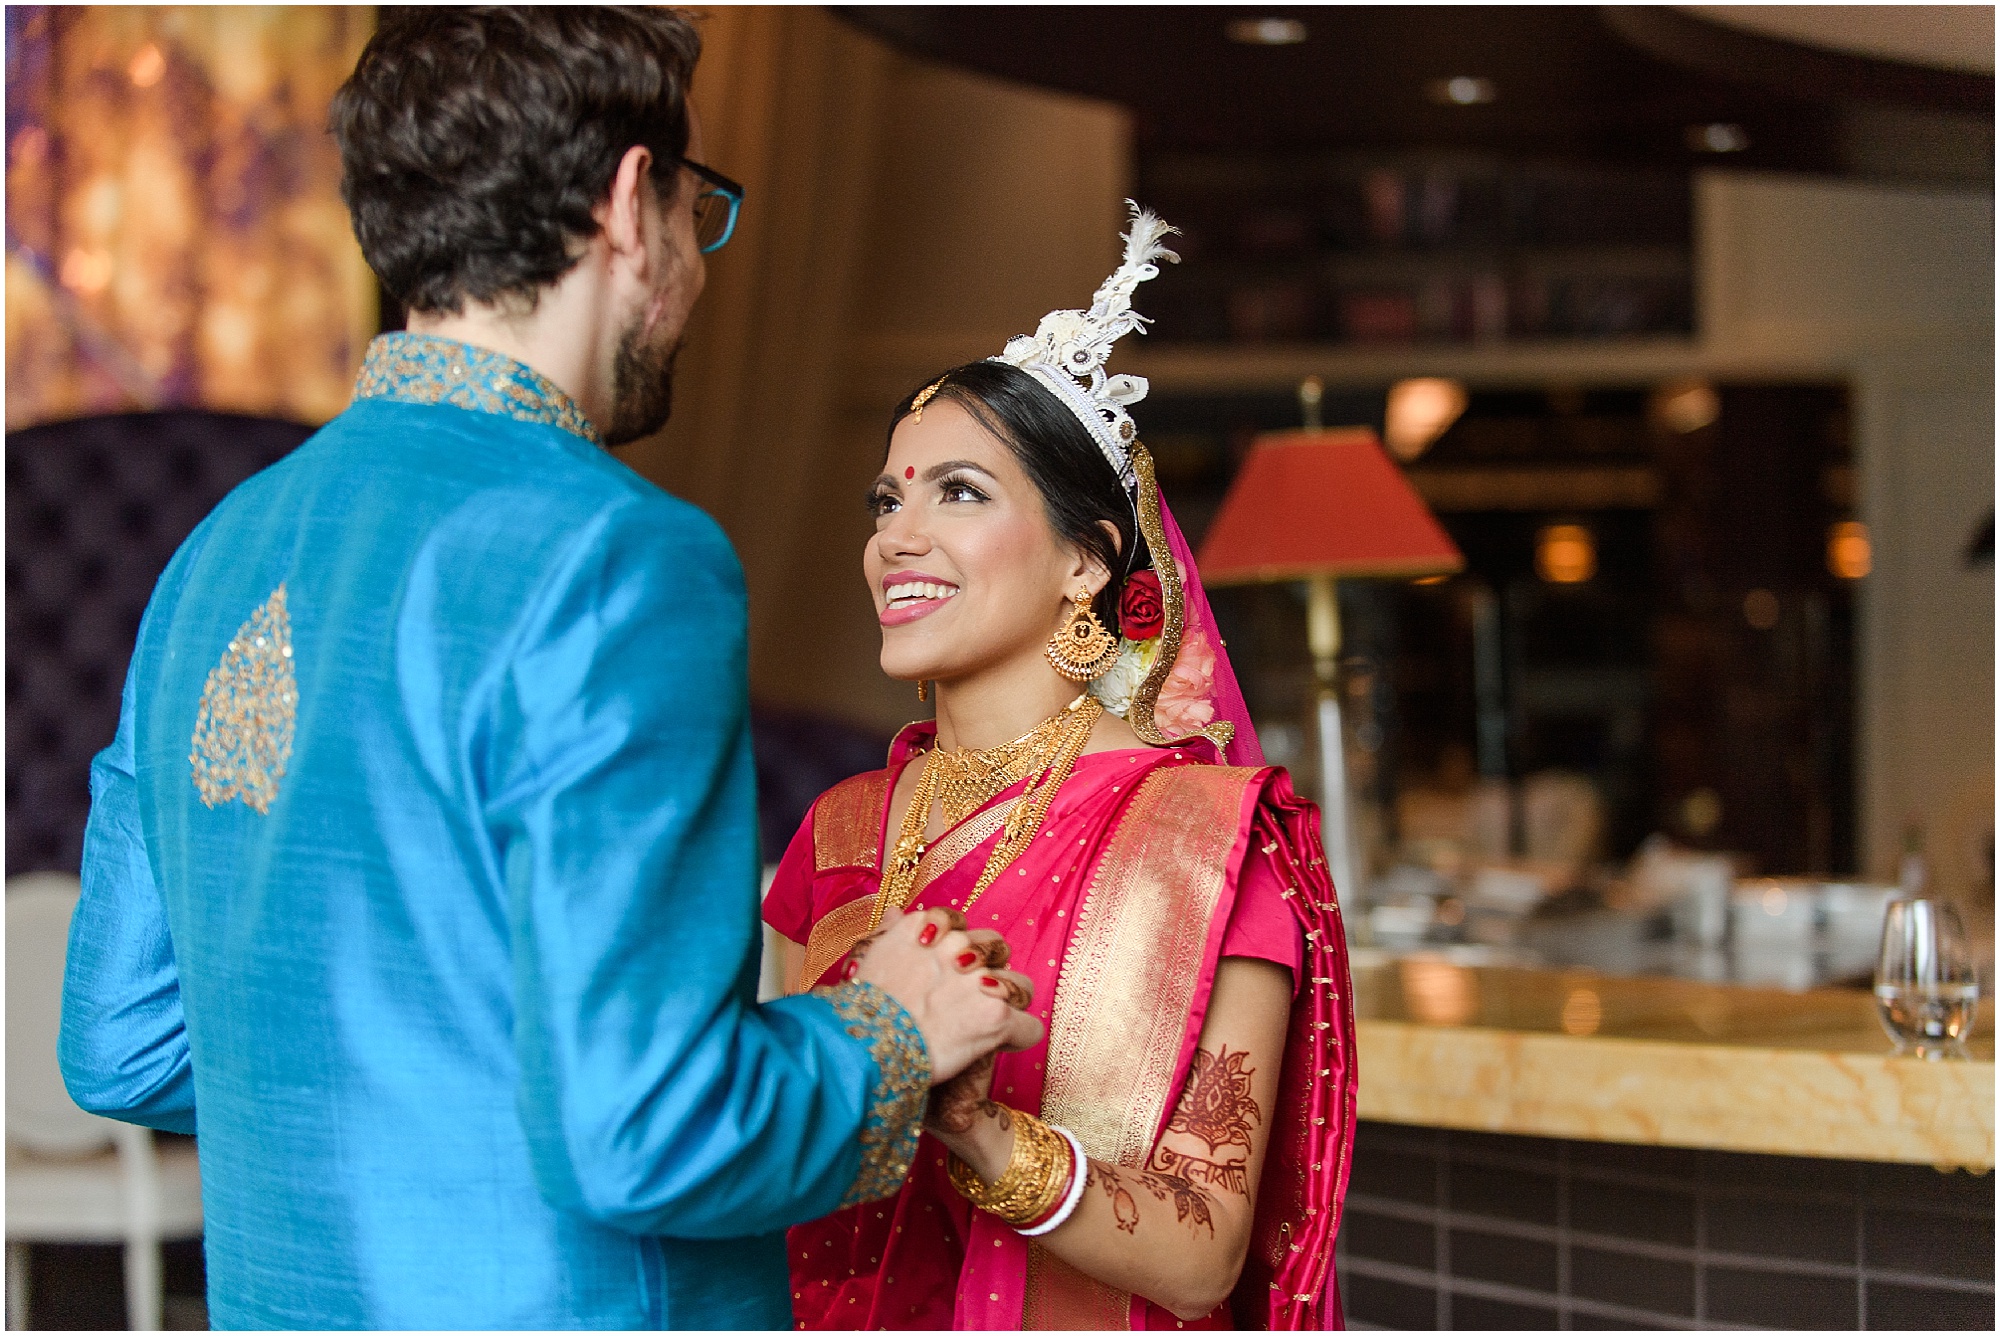 Alex + Shaoli, Indian wedding, Jewish wedding, Hilton Norfolk the MAIN wedding, Fowler Studios